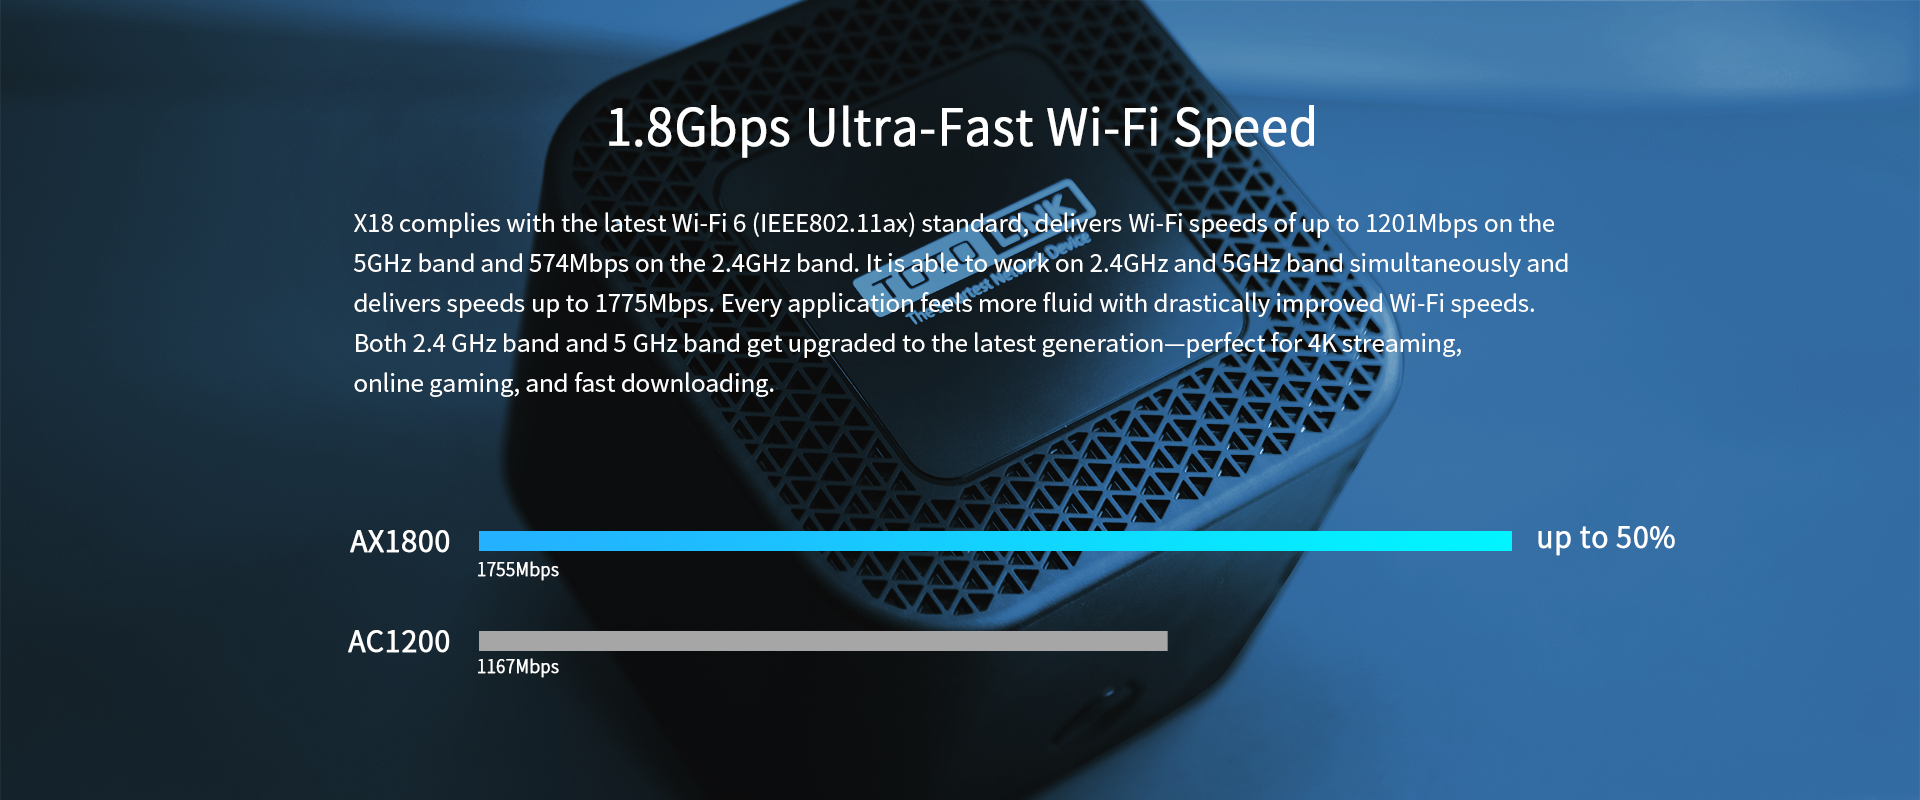 1.8 Gbps ultra fast wifi-speed